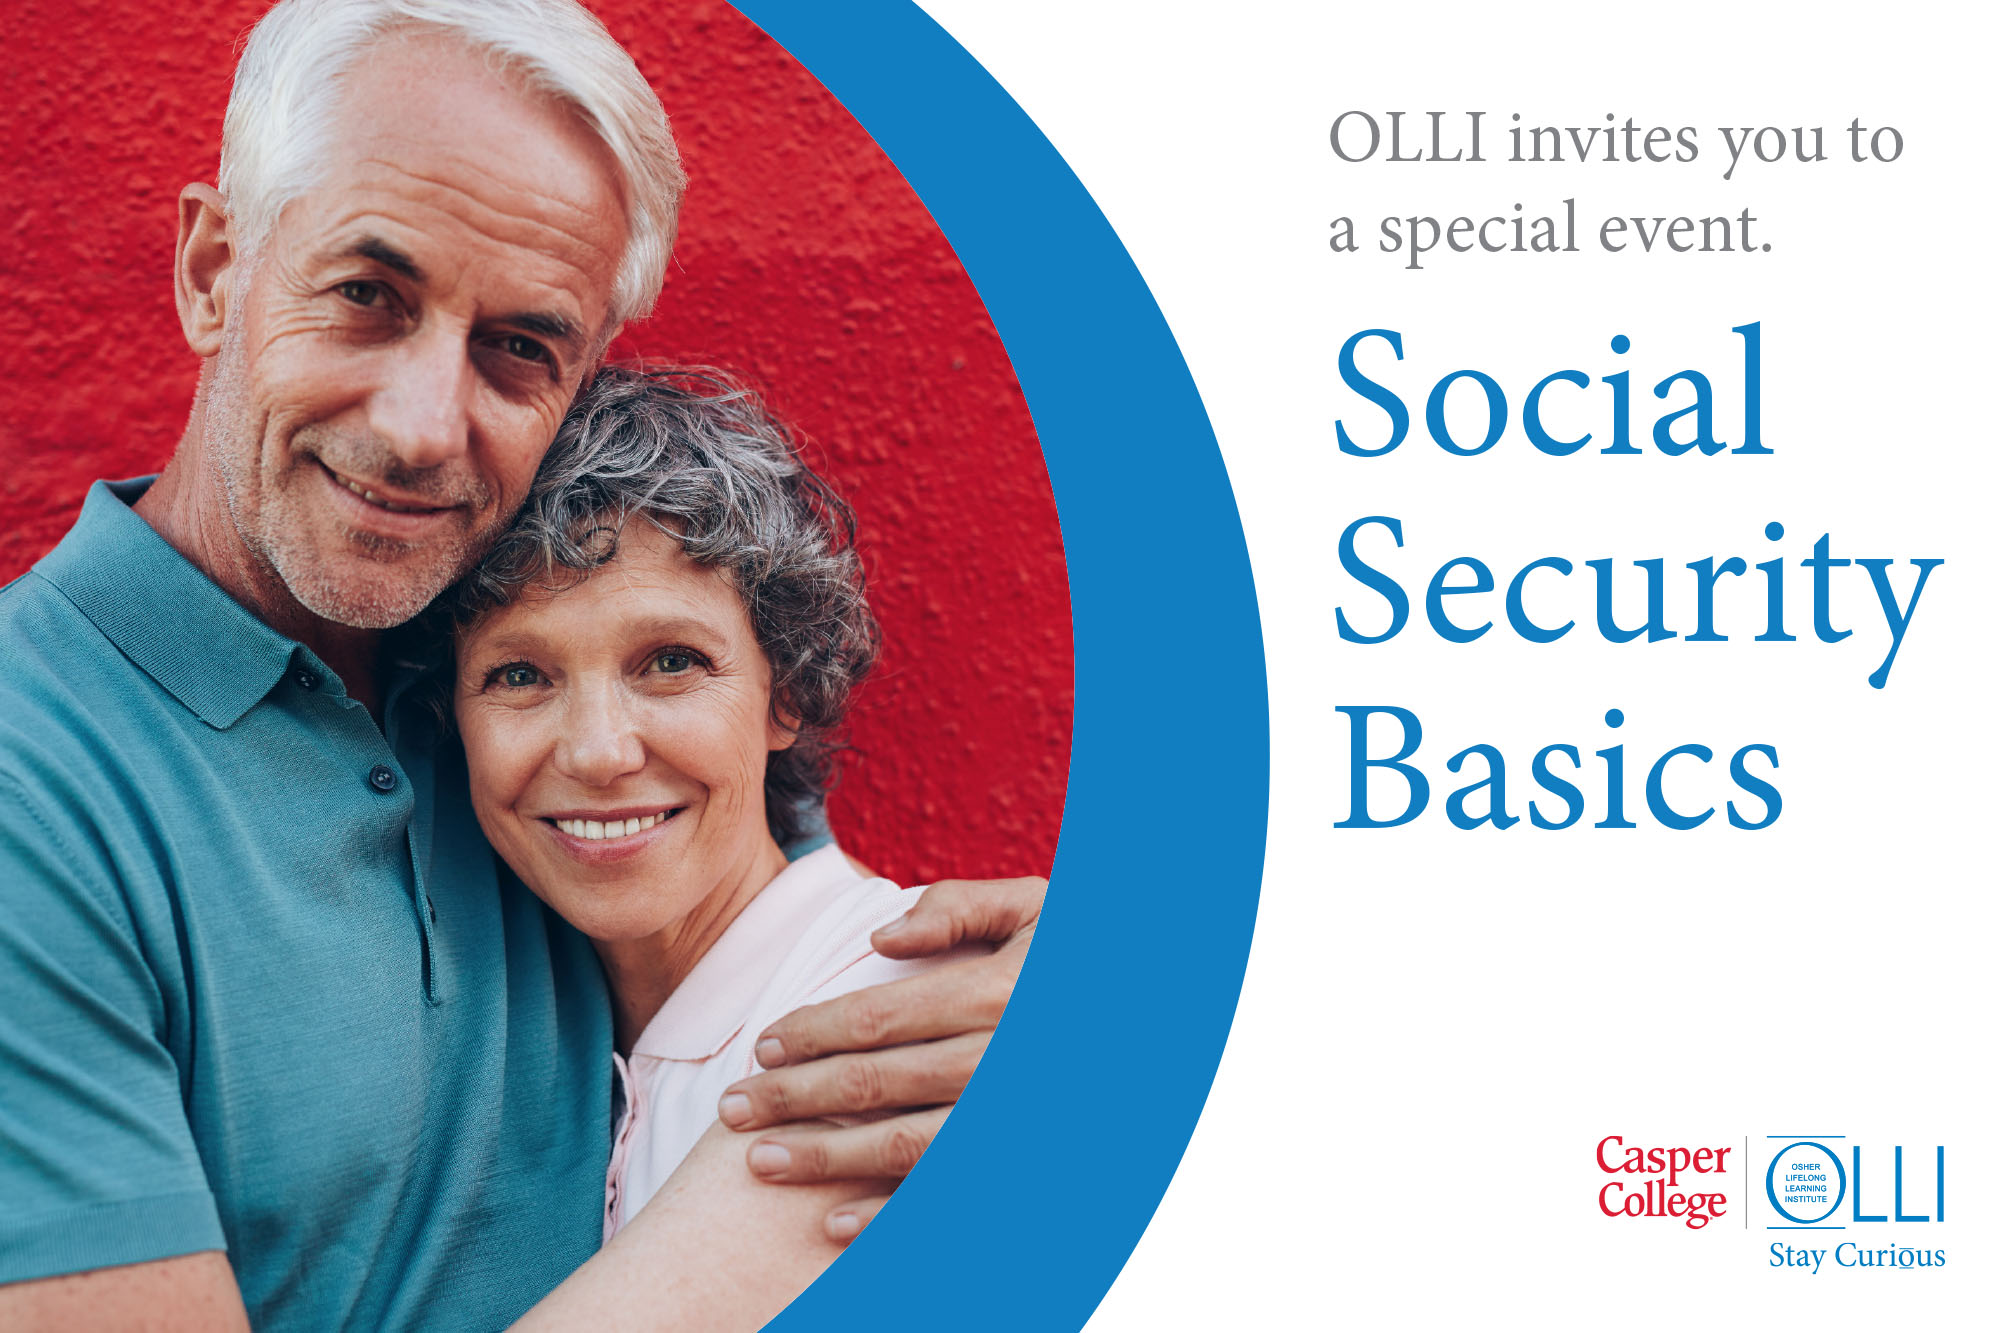 Image for Social Security seminar press release.